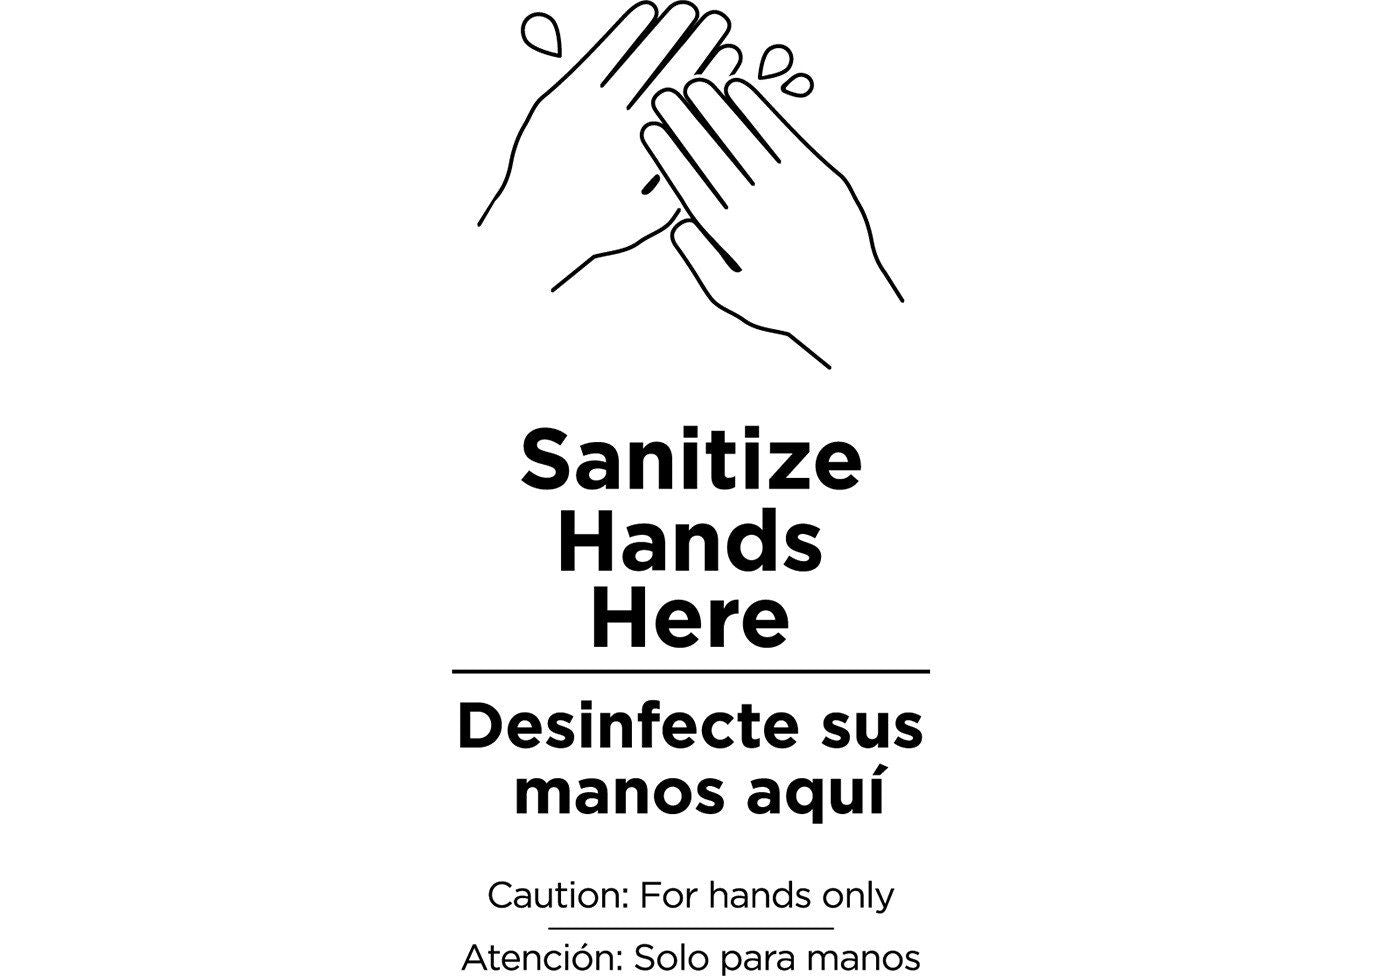 UltraSite Large Hand Sanitizer Station Add-On - Automatic Dispenser